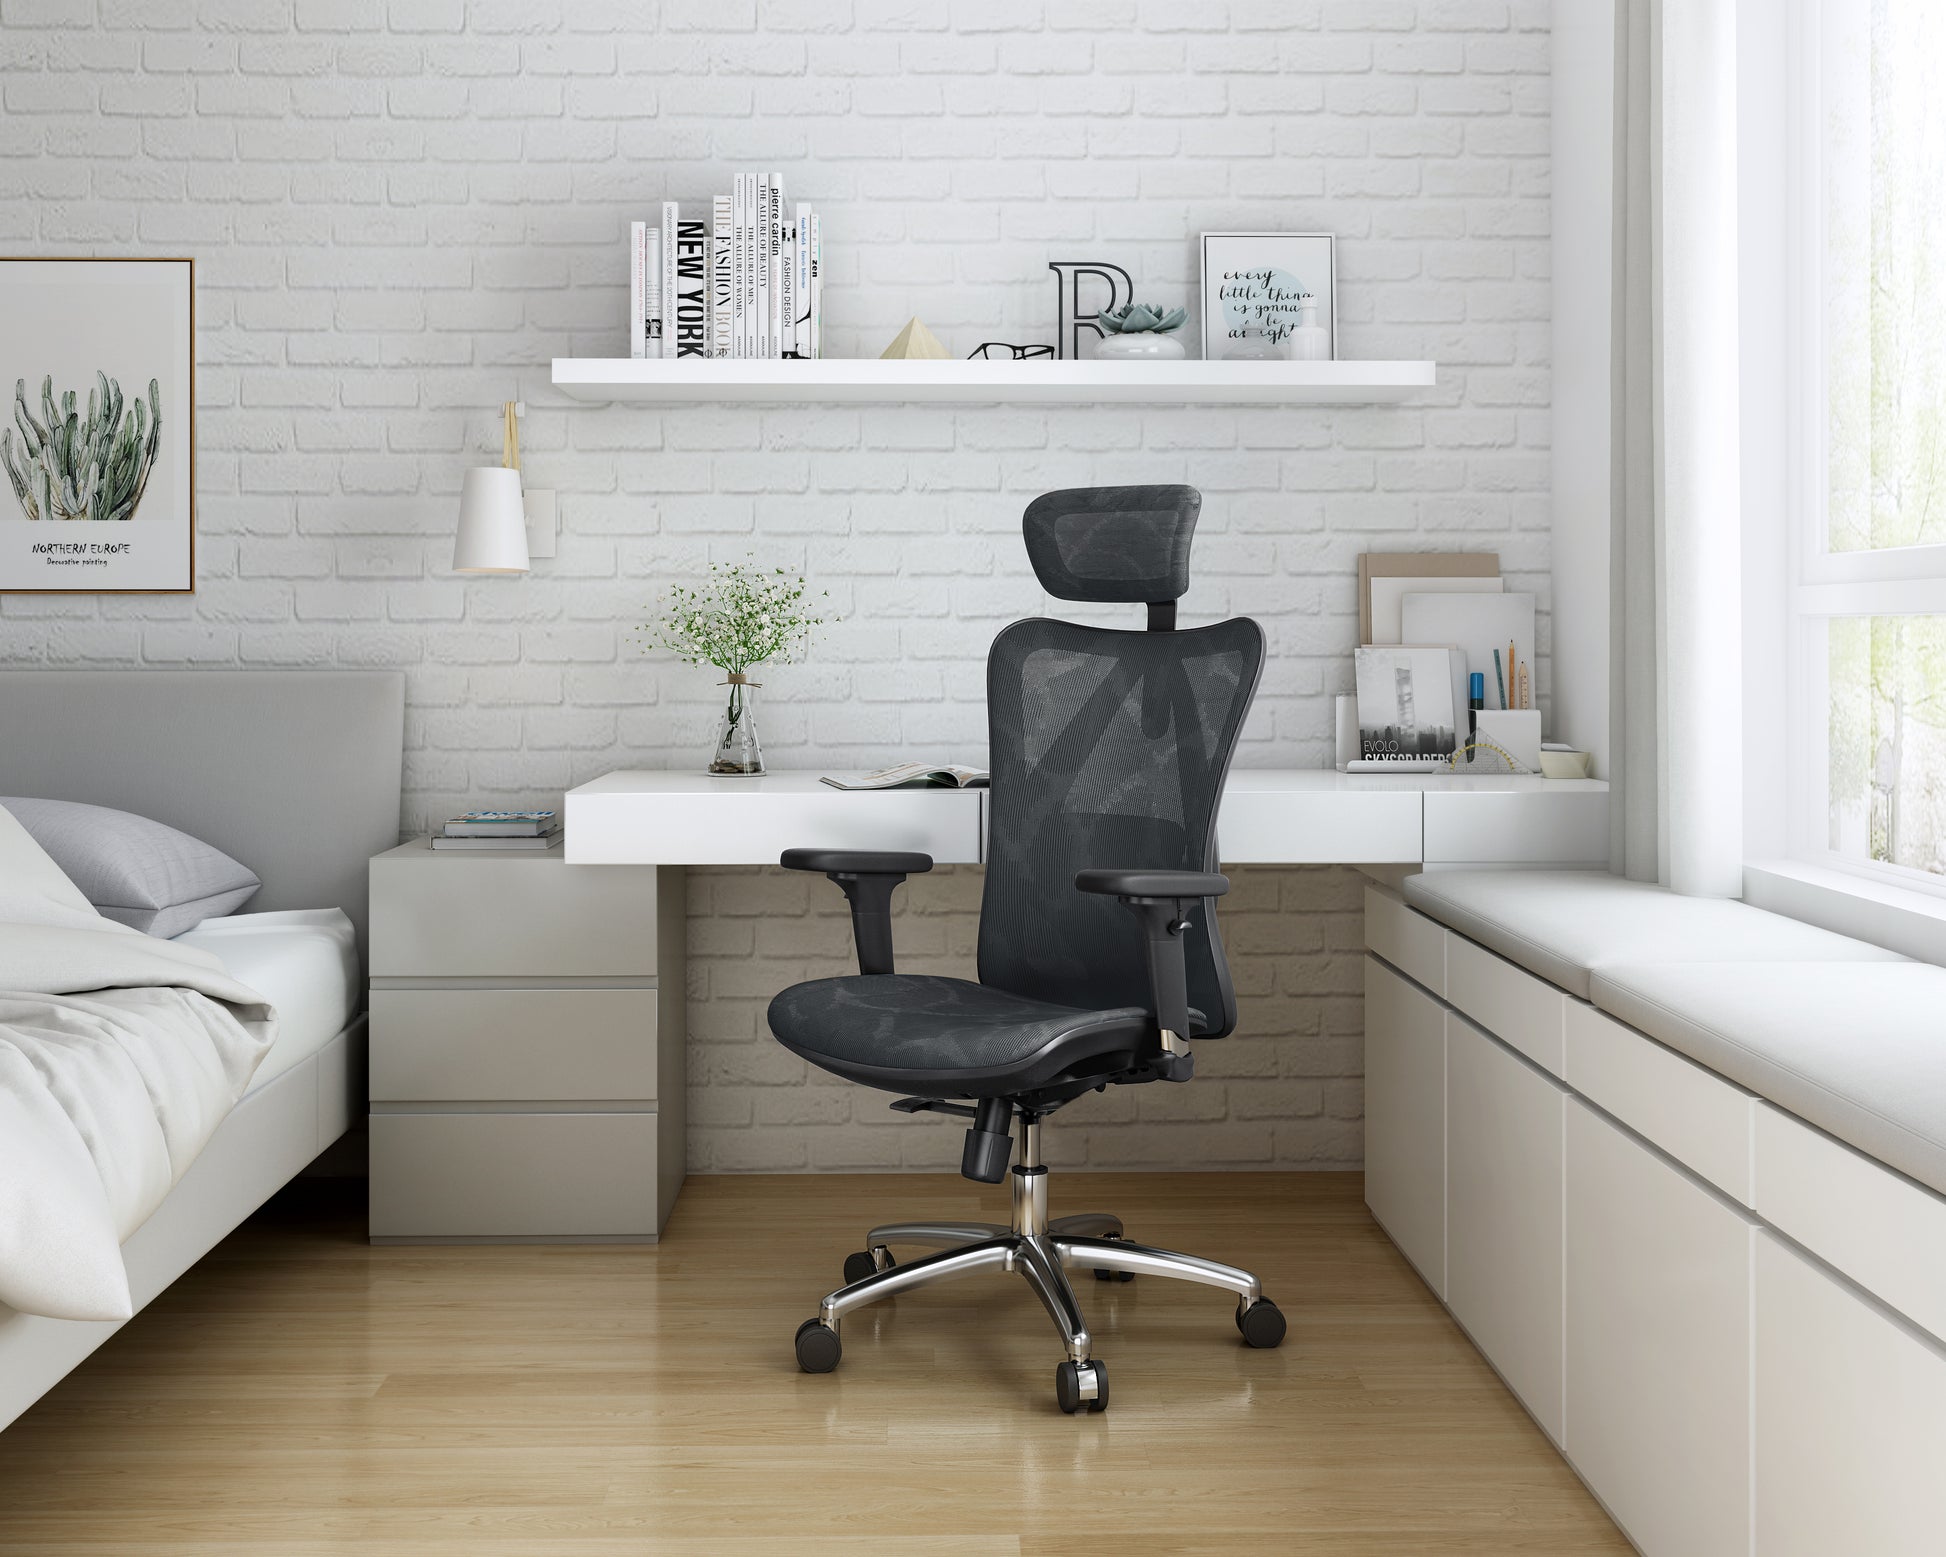 Sihoo M57 all mesh office chair Adjustable Ergonomic Chair hard-working  office chair